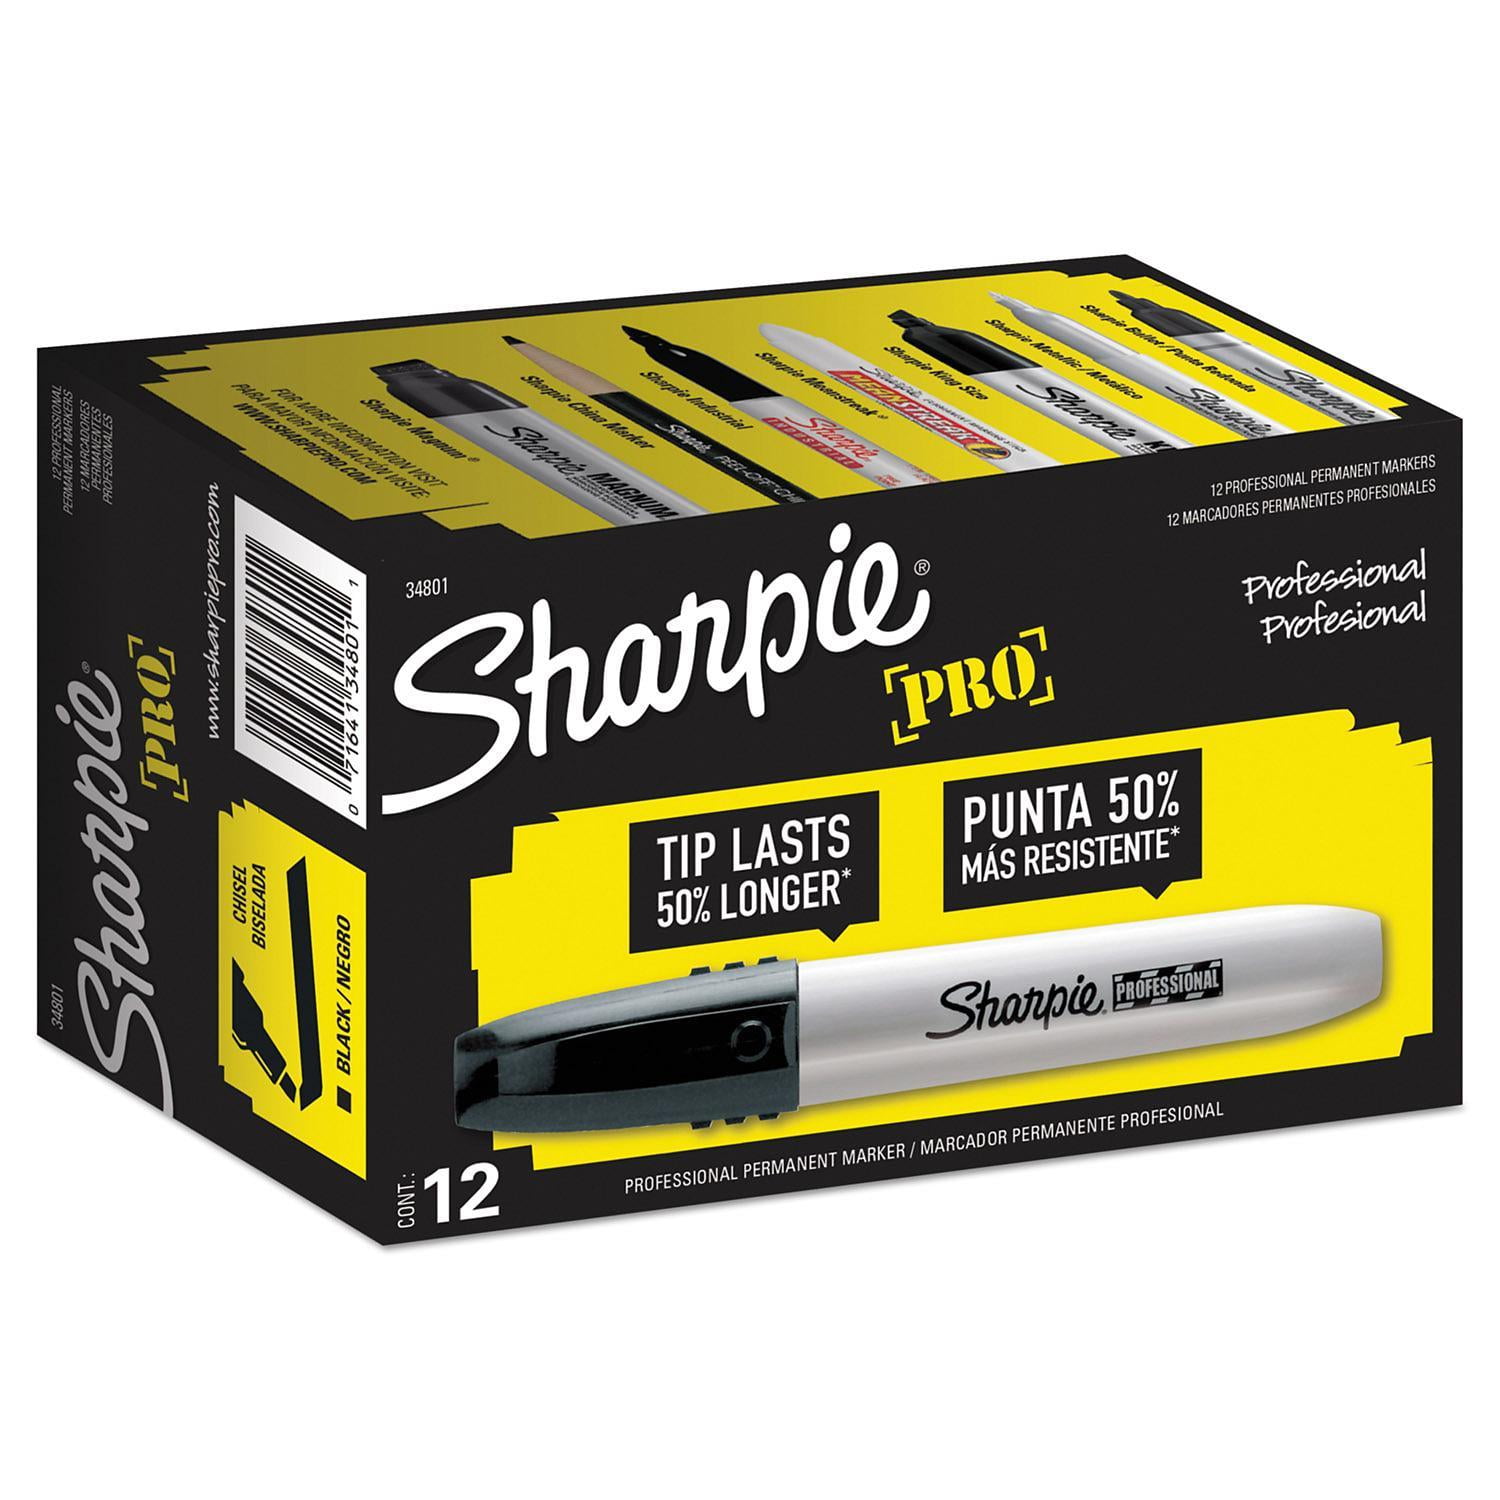 Sharpie Permanent Markers - Bunzl Processor Division